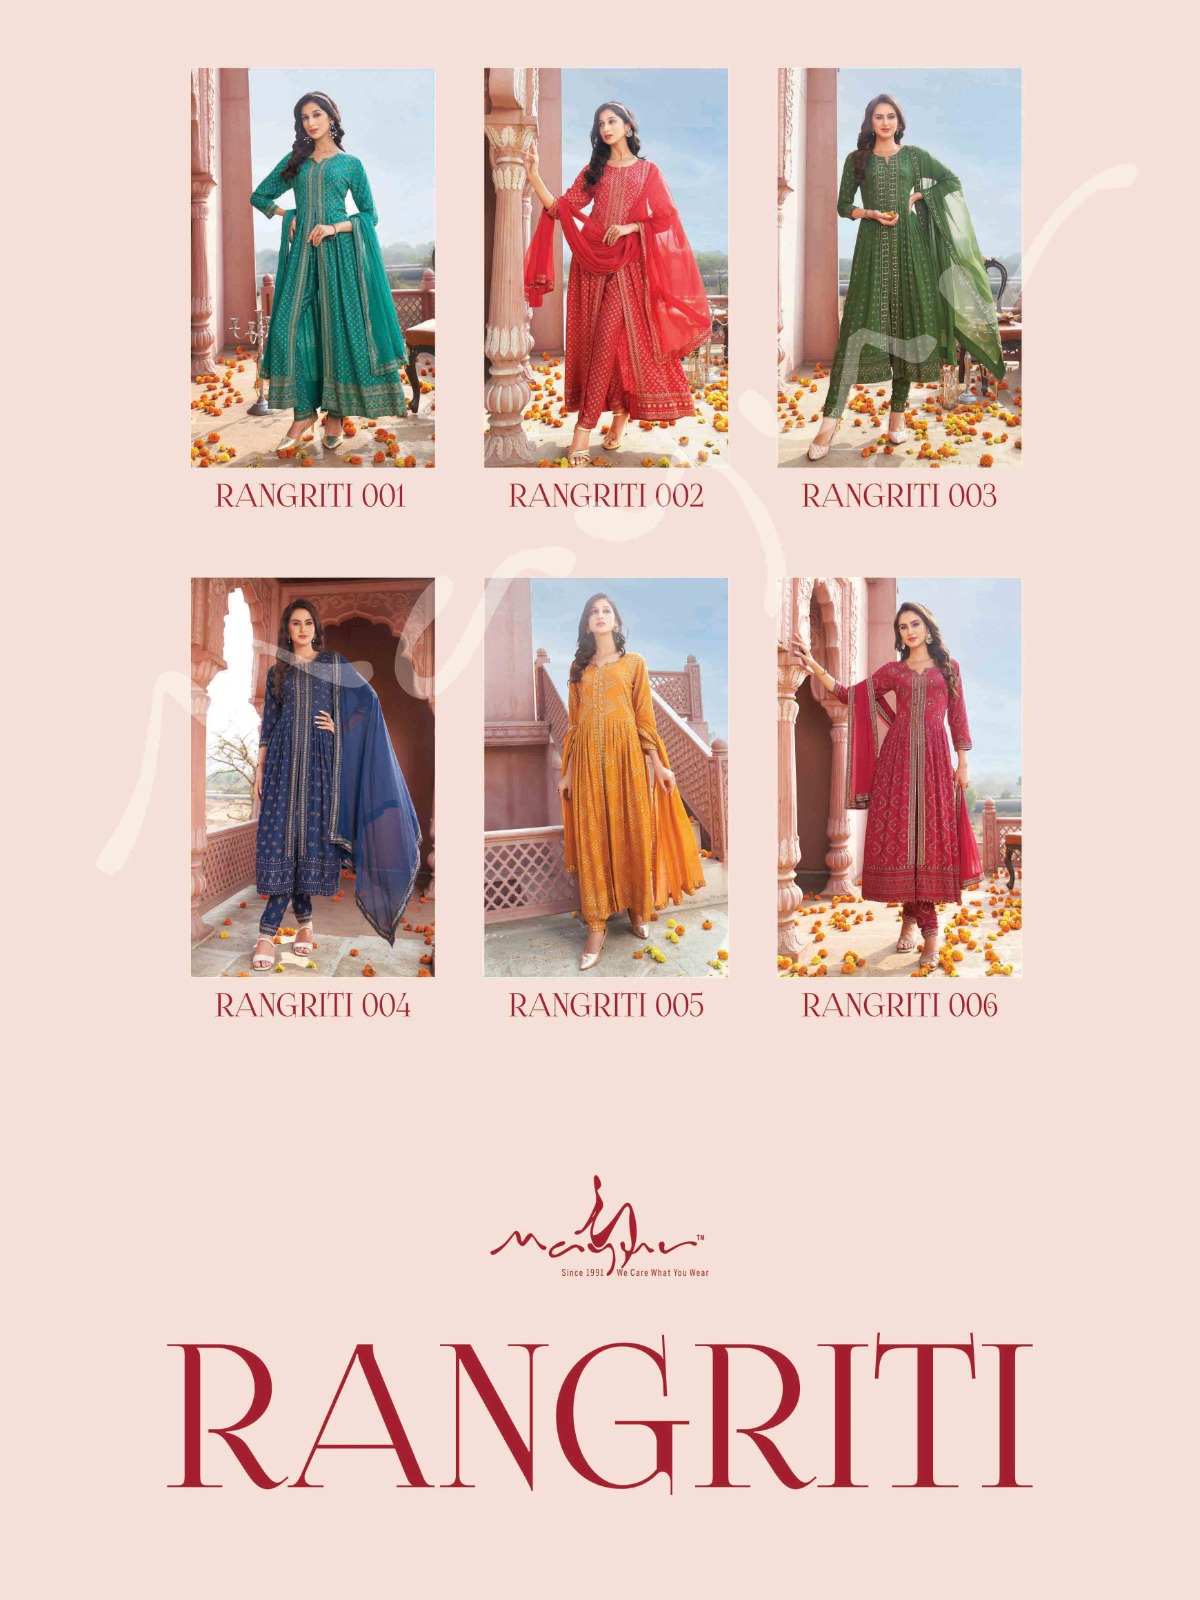 mayur rangriti rayon new and modern style top pant with dupatta catalog